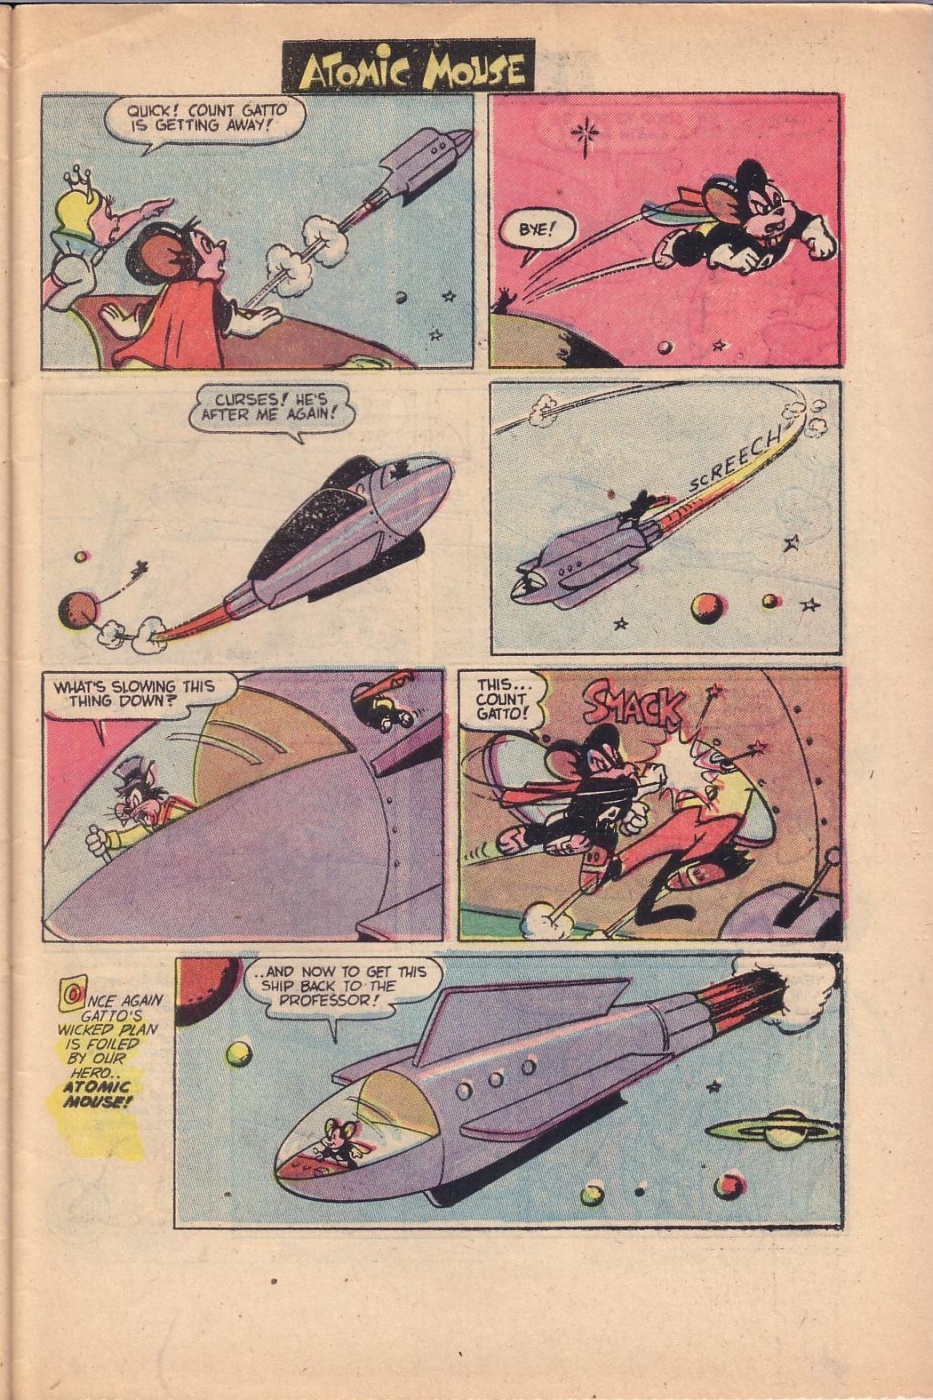 Atomic Mouse Comics - Funny Comics (33)